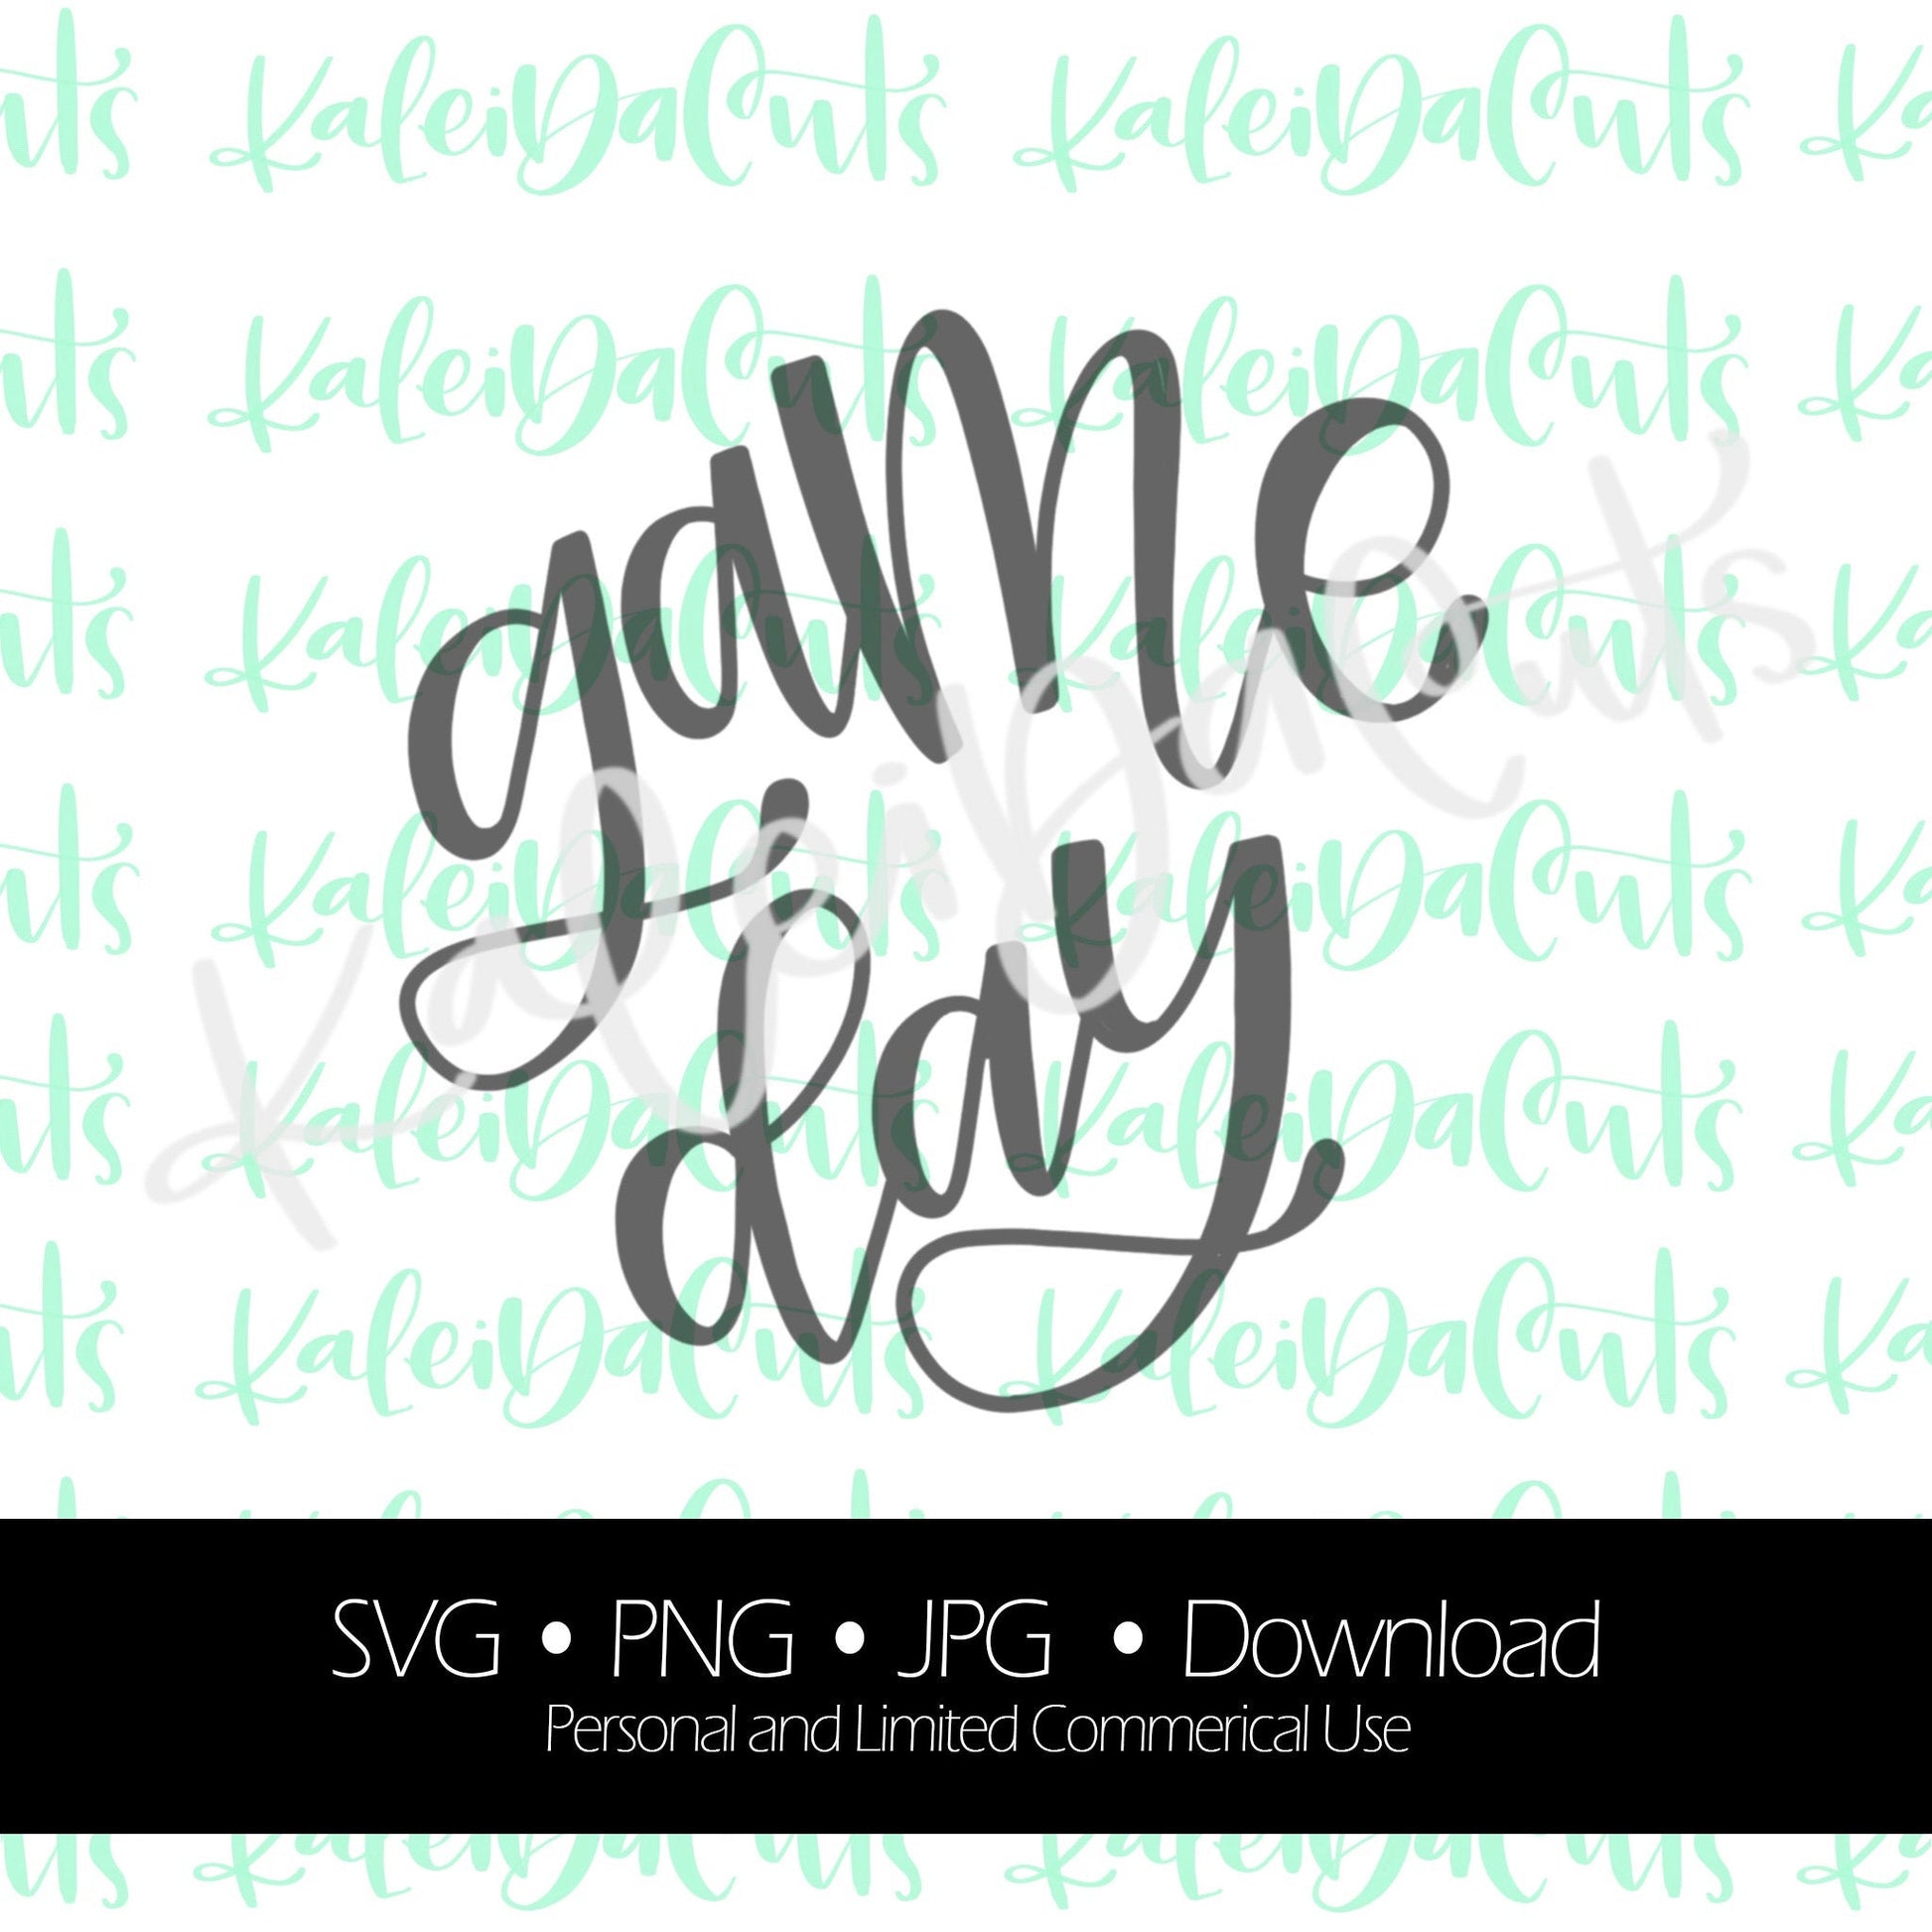 Game Day Lettering - Digital Download.